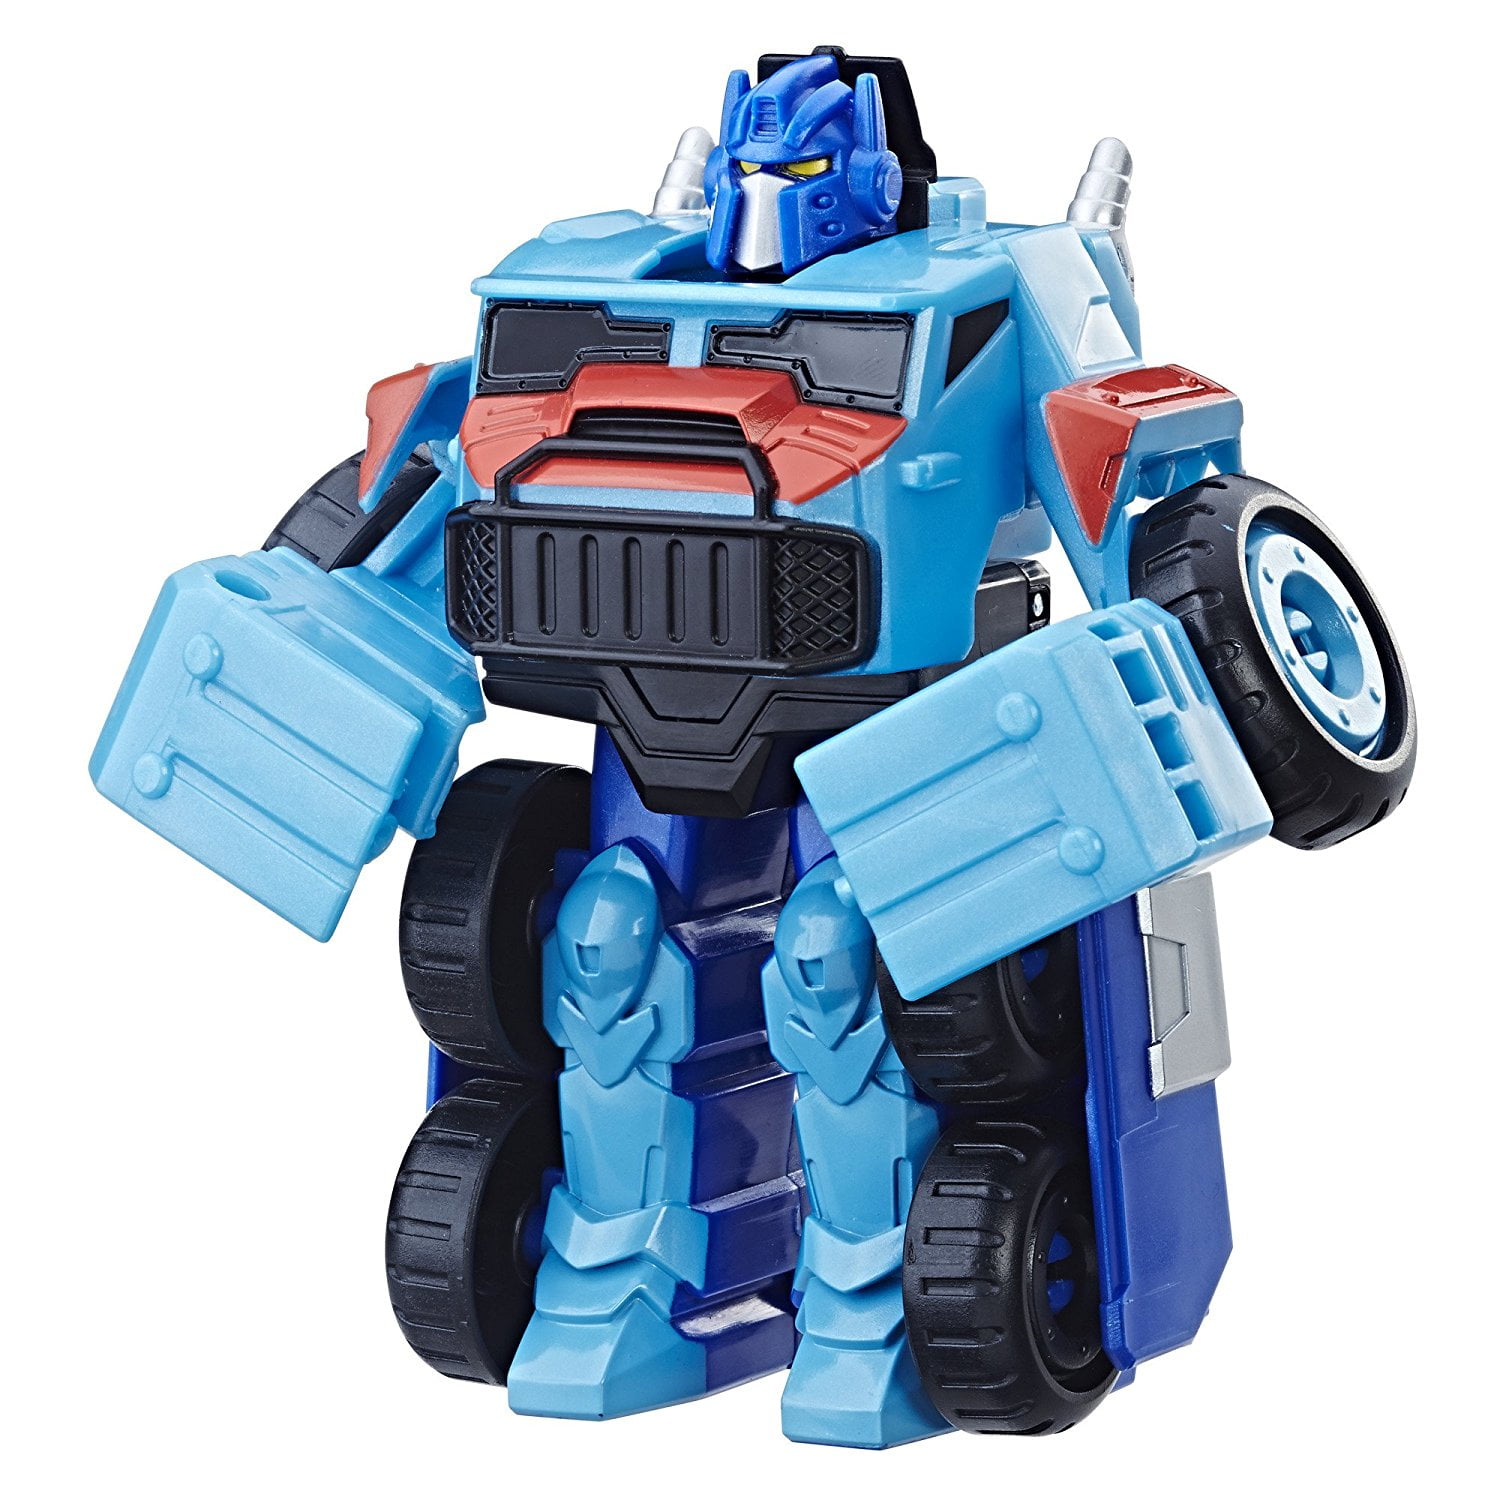 Heroes Transformers Rescue Bots Prime Walmart.com